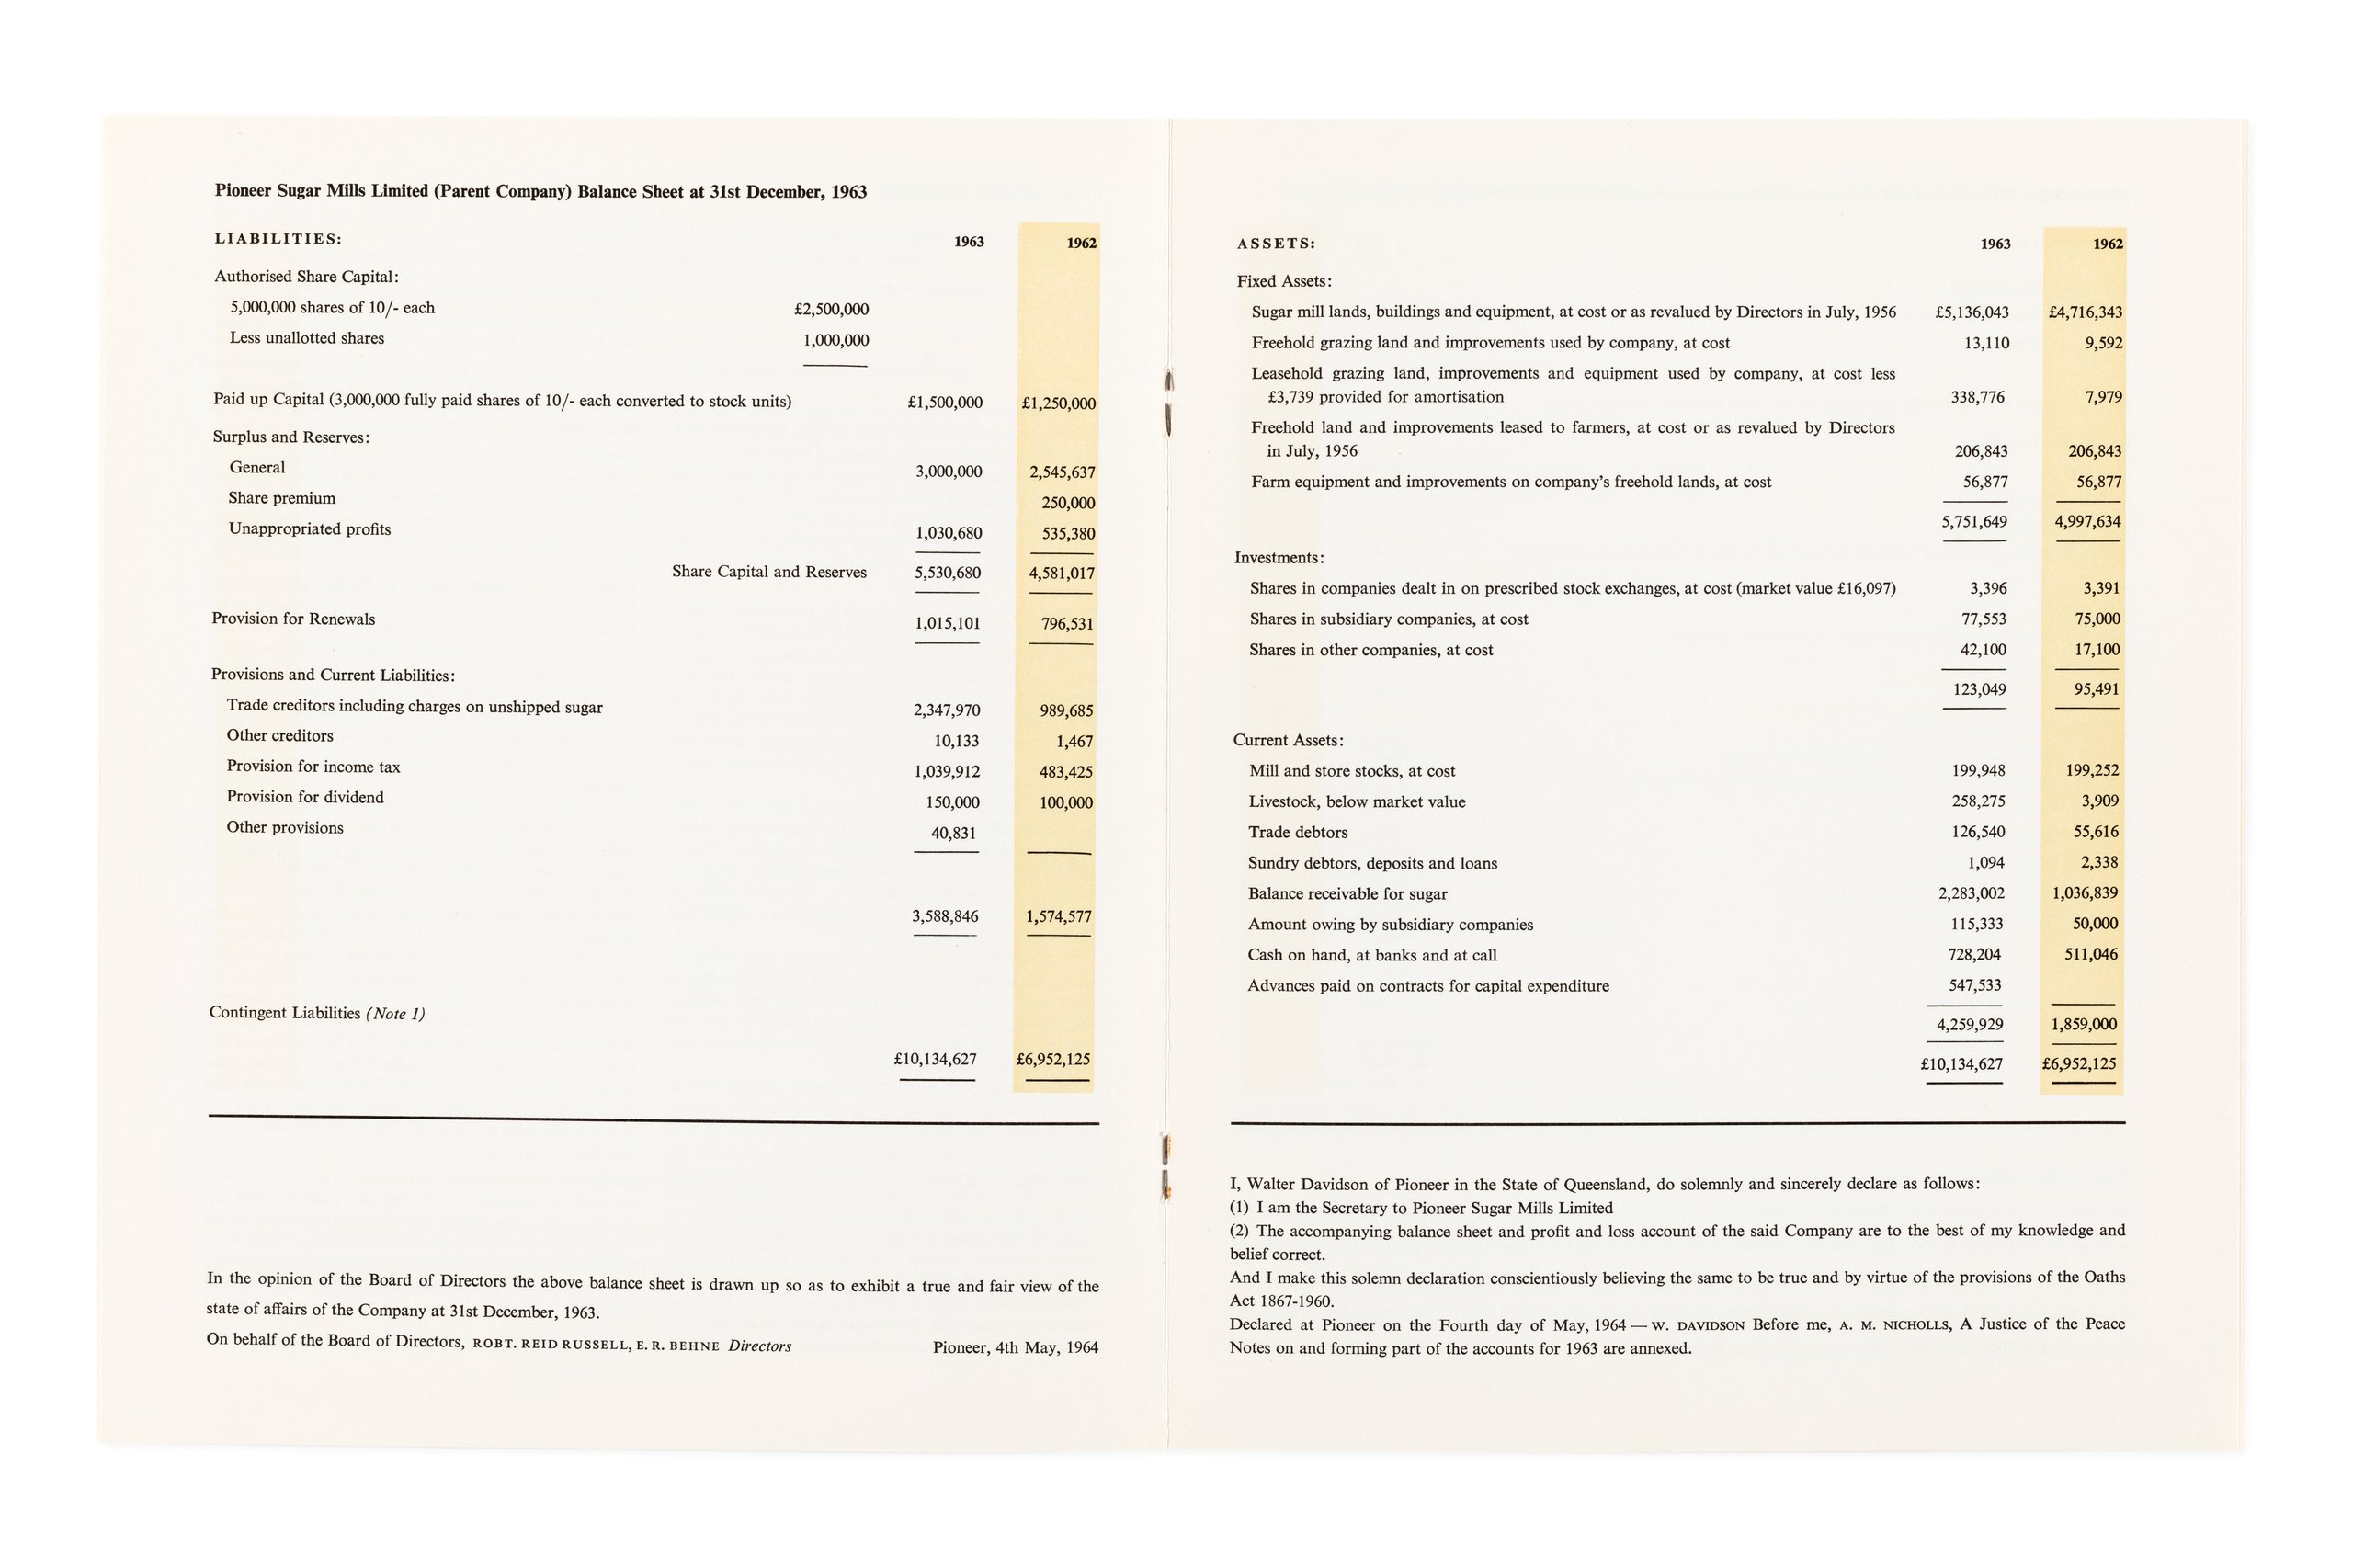 Pioneer Sugar Mills annual report designed by Alistair Morrison